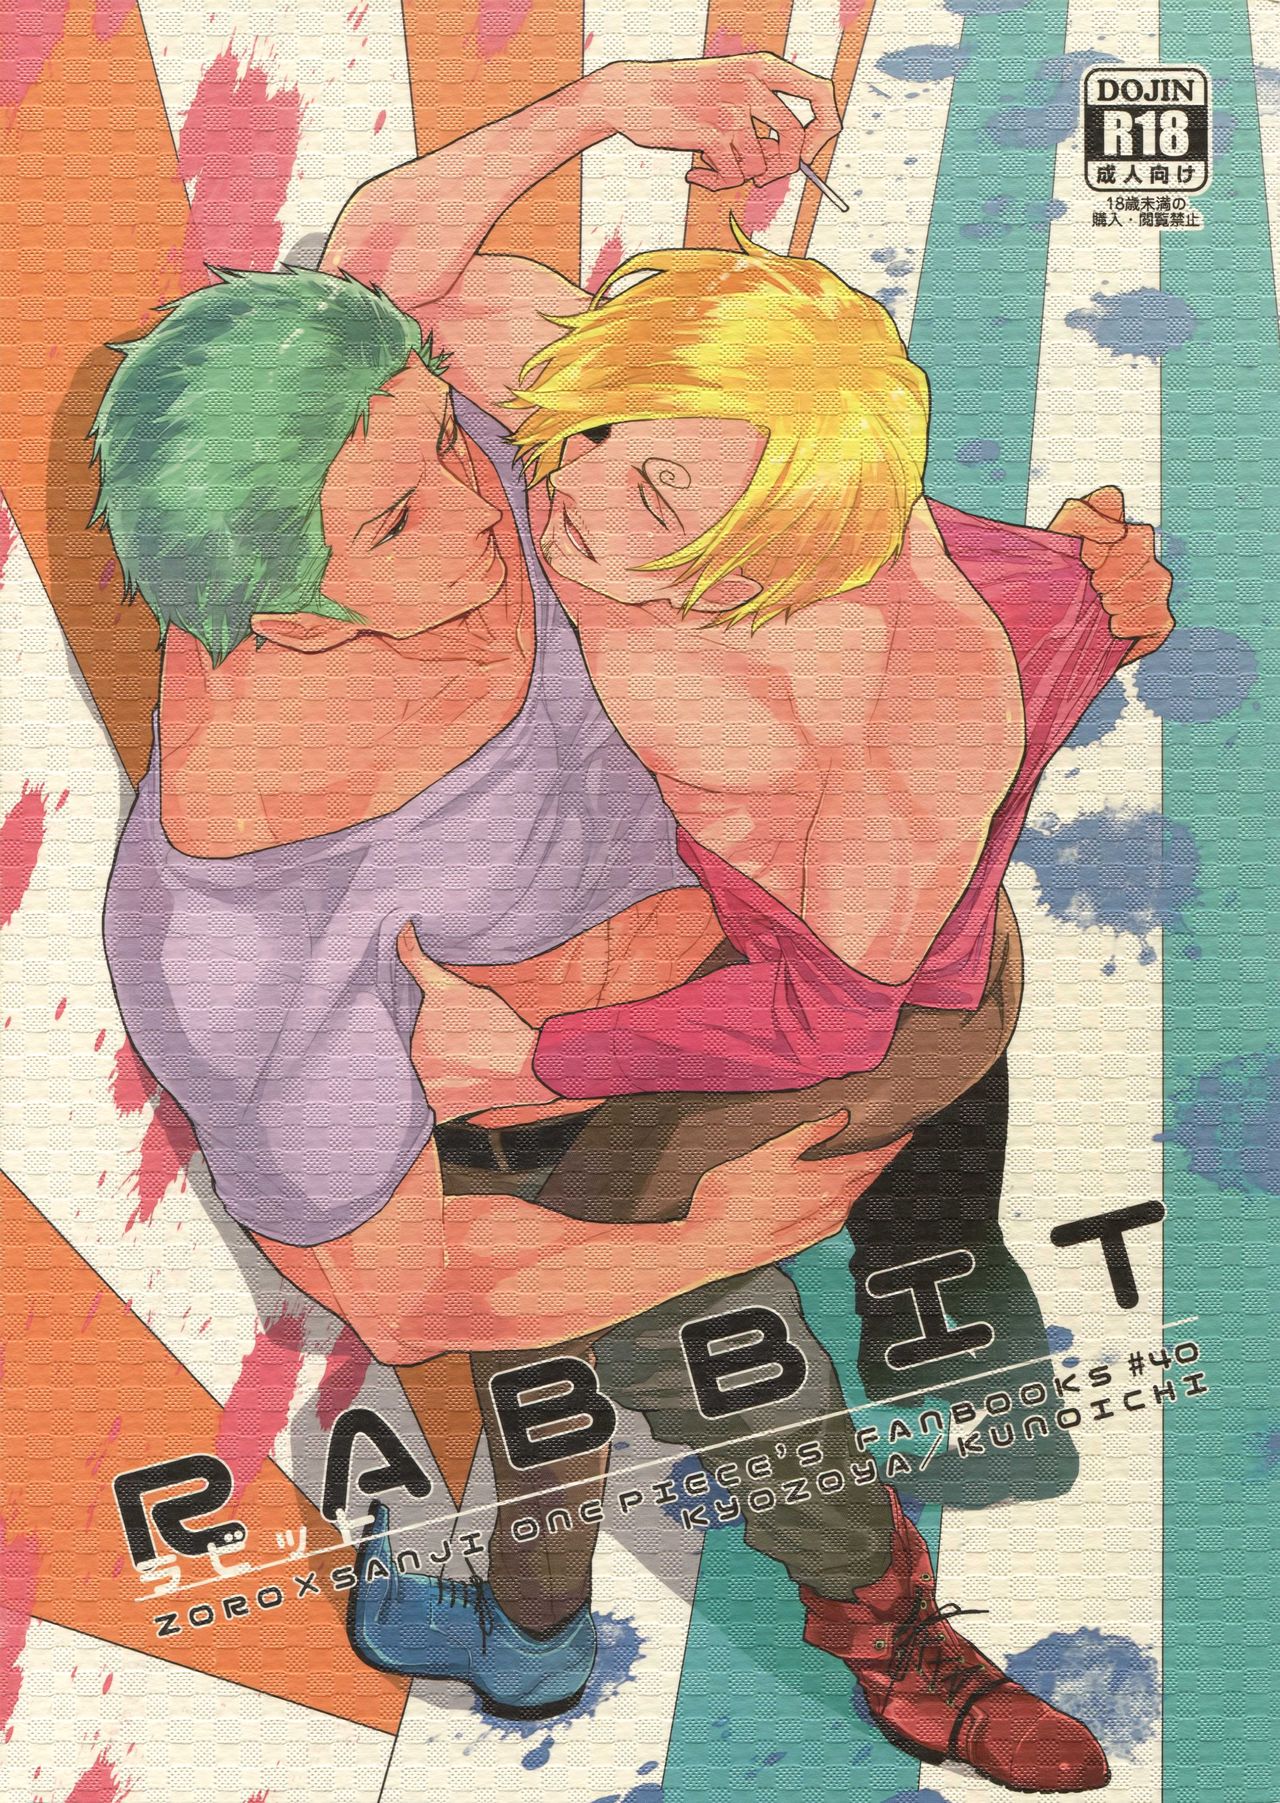 (C90) [Kyozoya (Kunoichi)] RABBIT (One Piece) (C90) [京蔵屋 (くノ壱)] RABBIT (ワンピース)